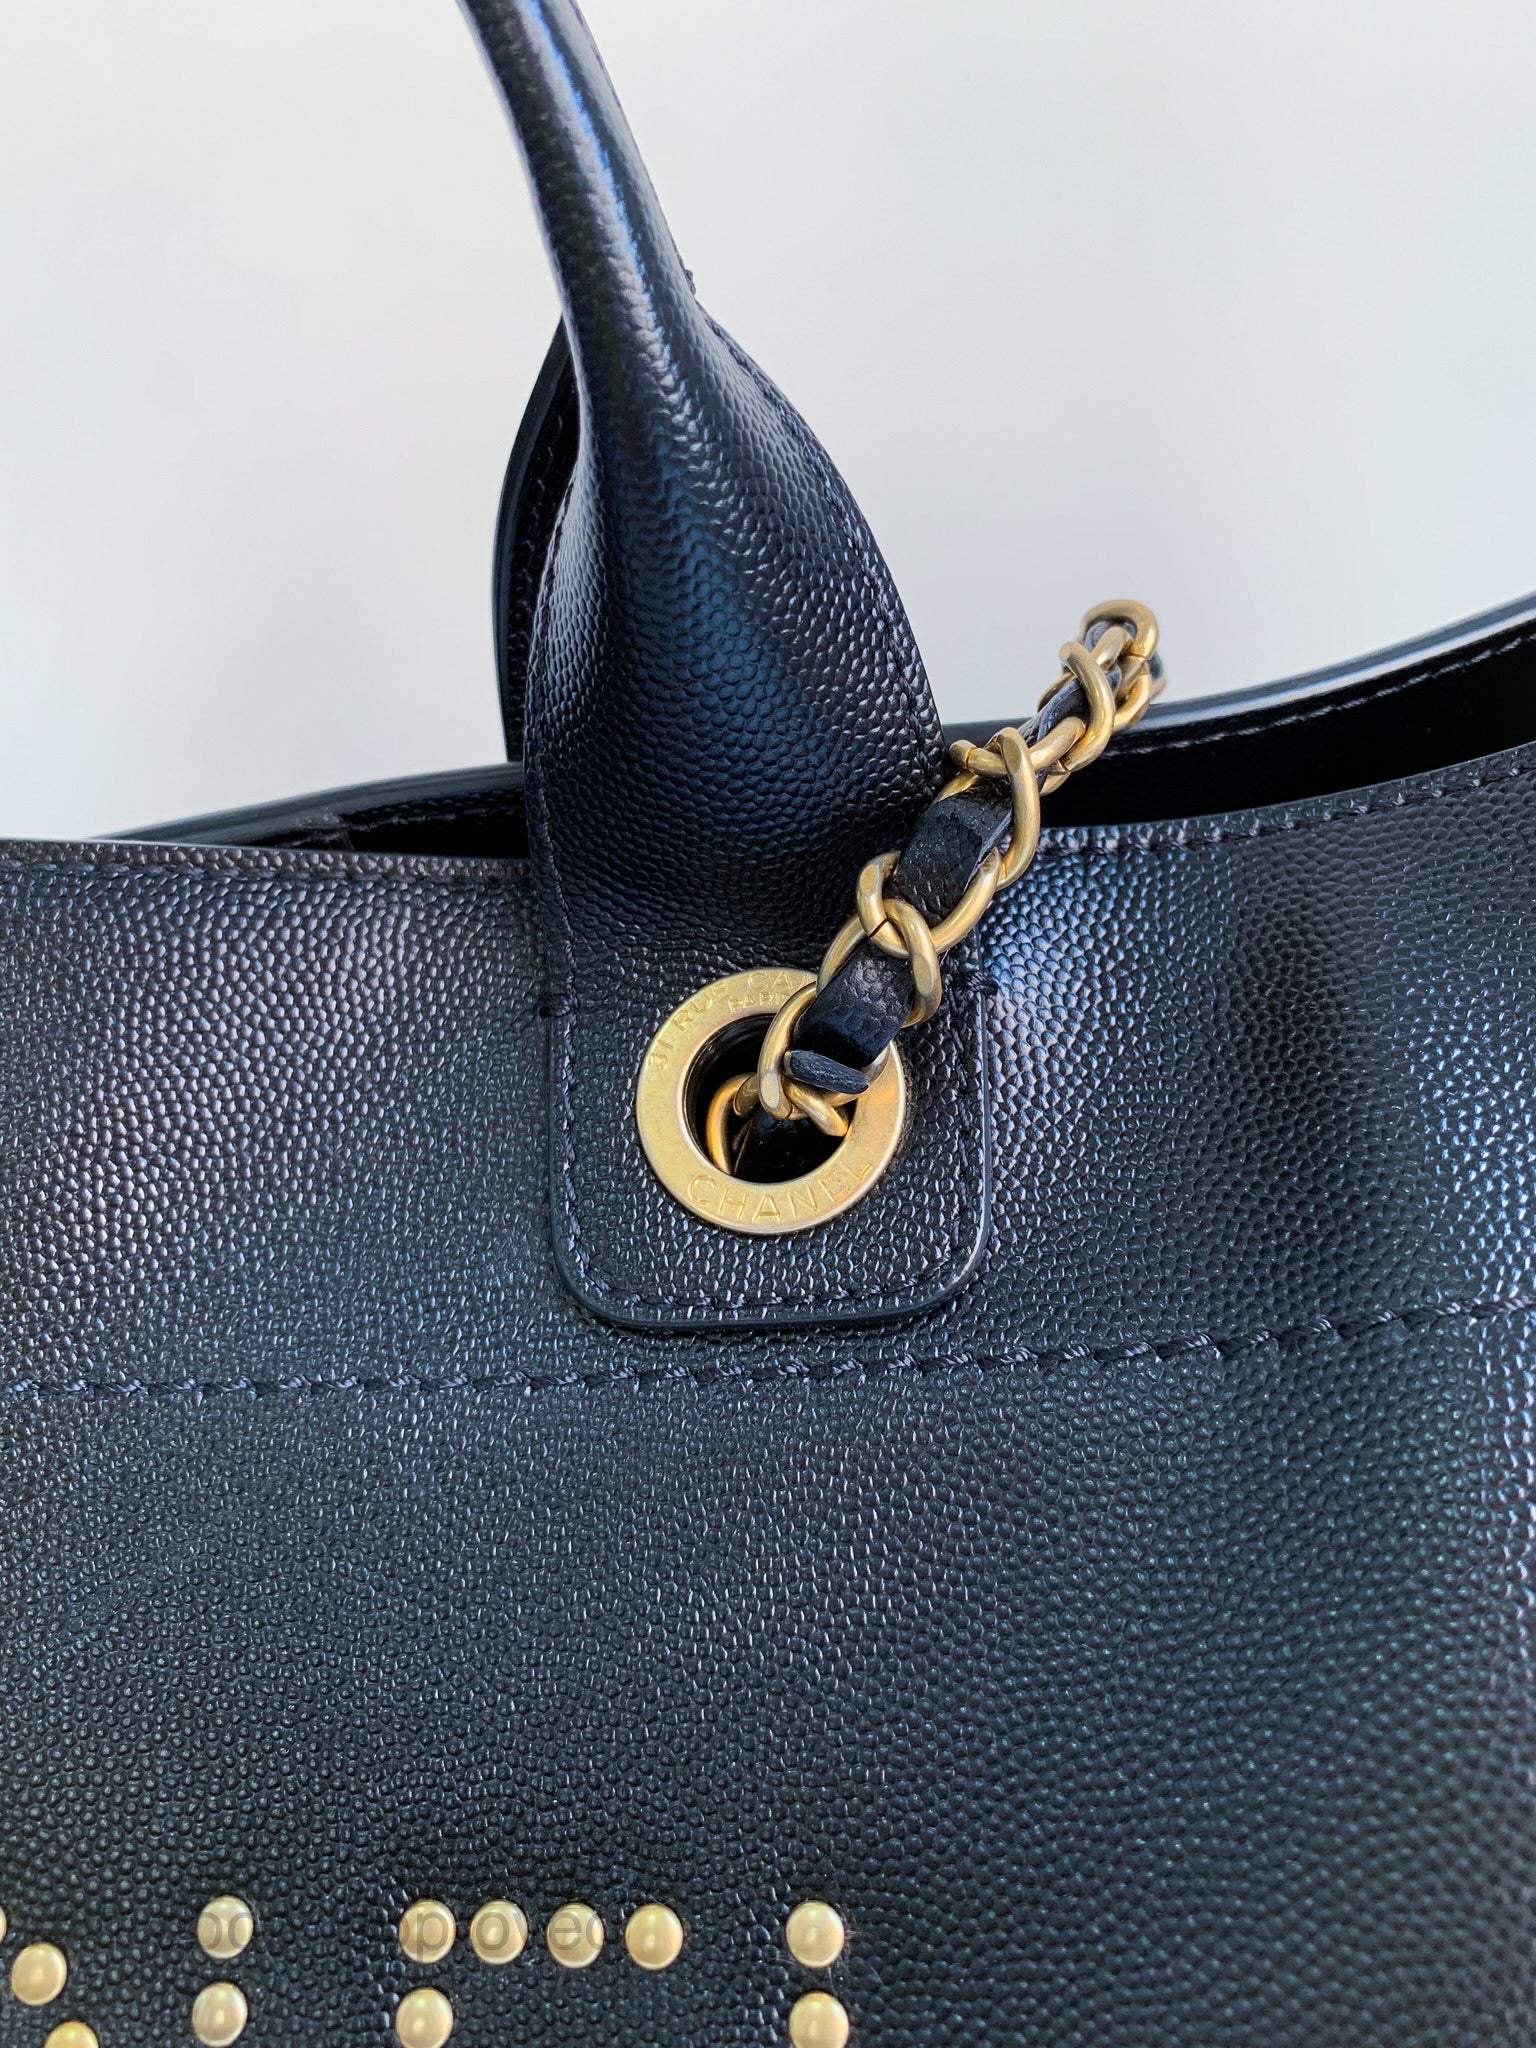 Chanel Burgundy Flap Handbag - 204 For Sale on 1stDibs